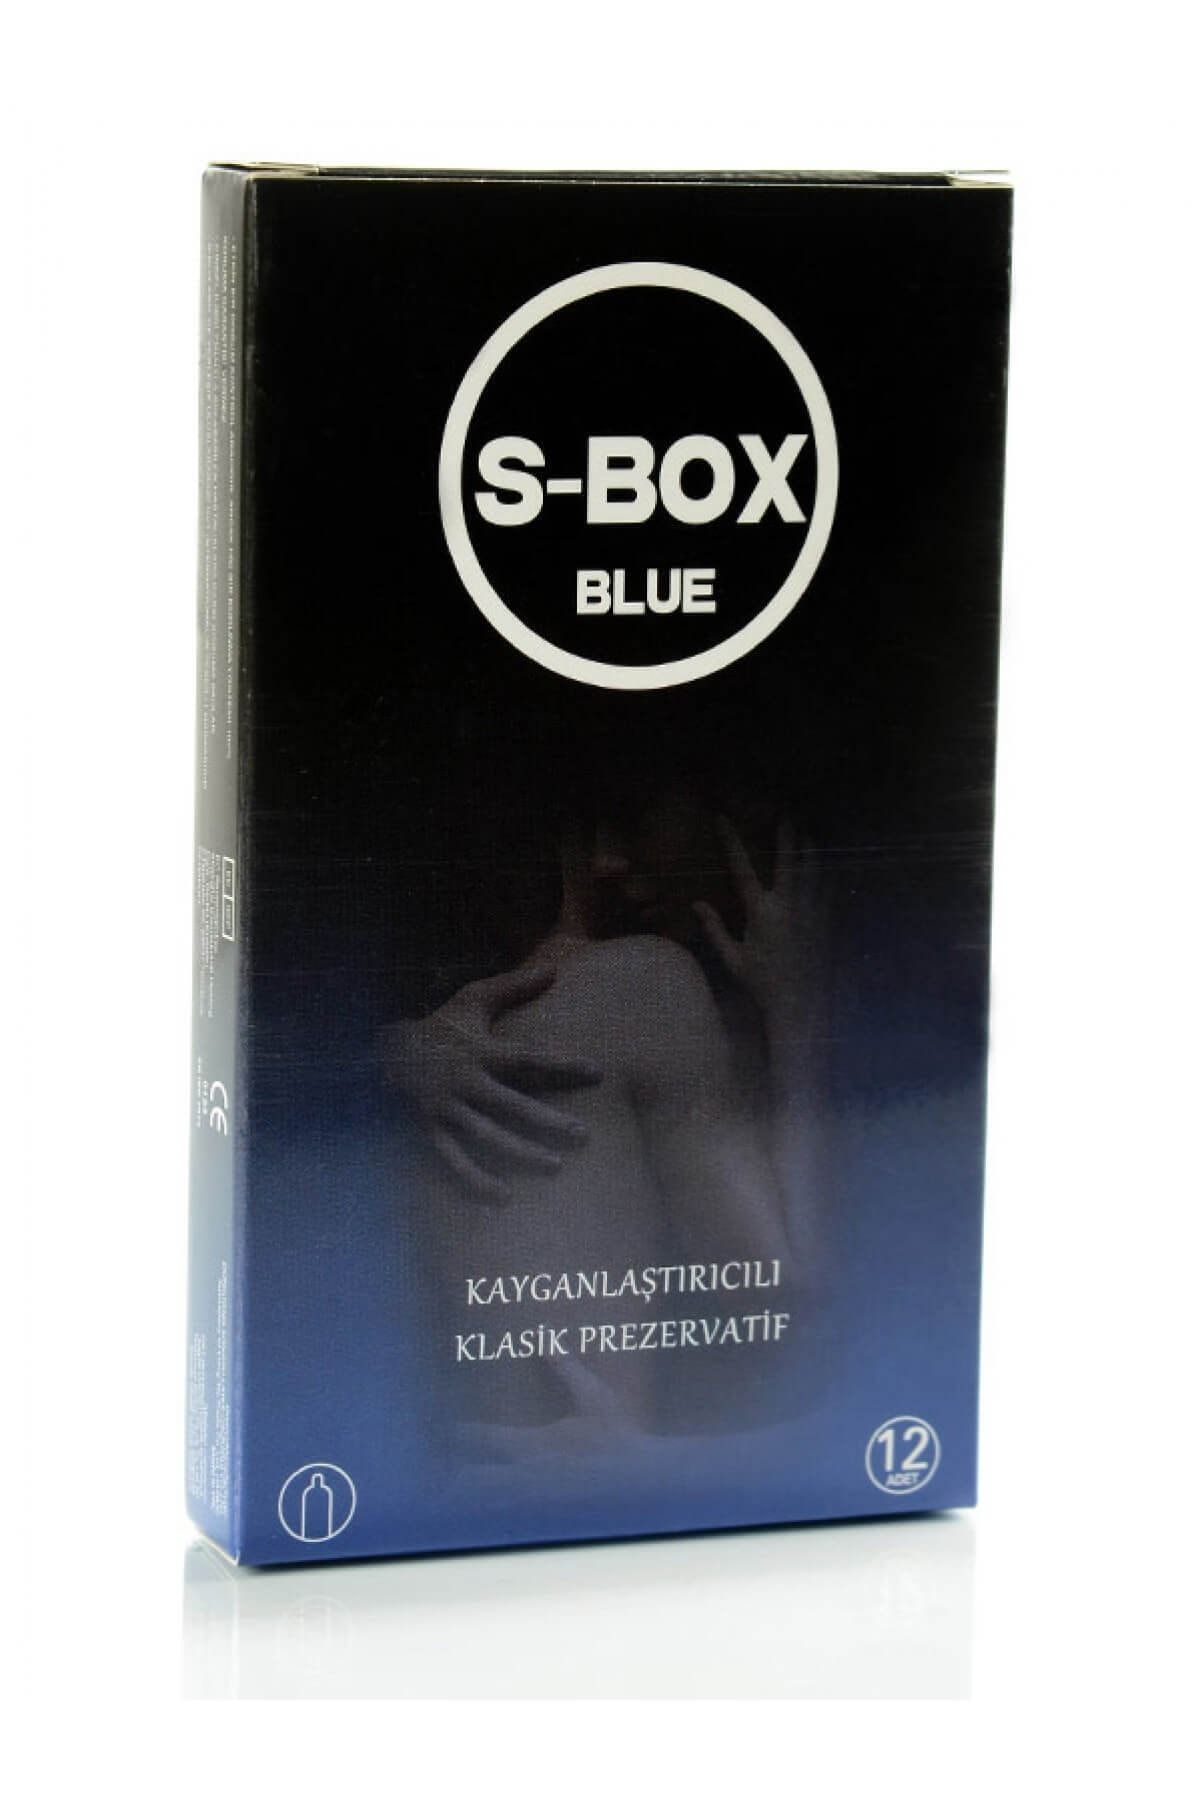 S-Box Klasik Prezervatif Blue Condom 12 Adet